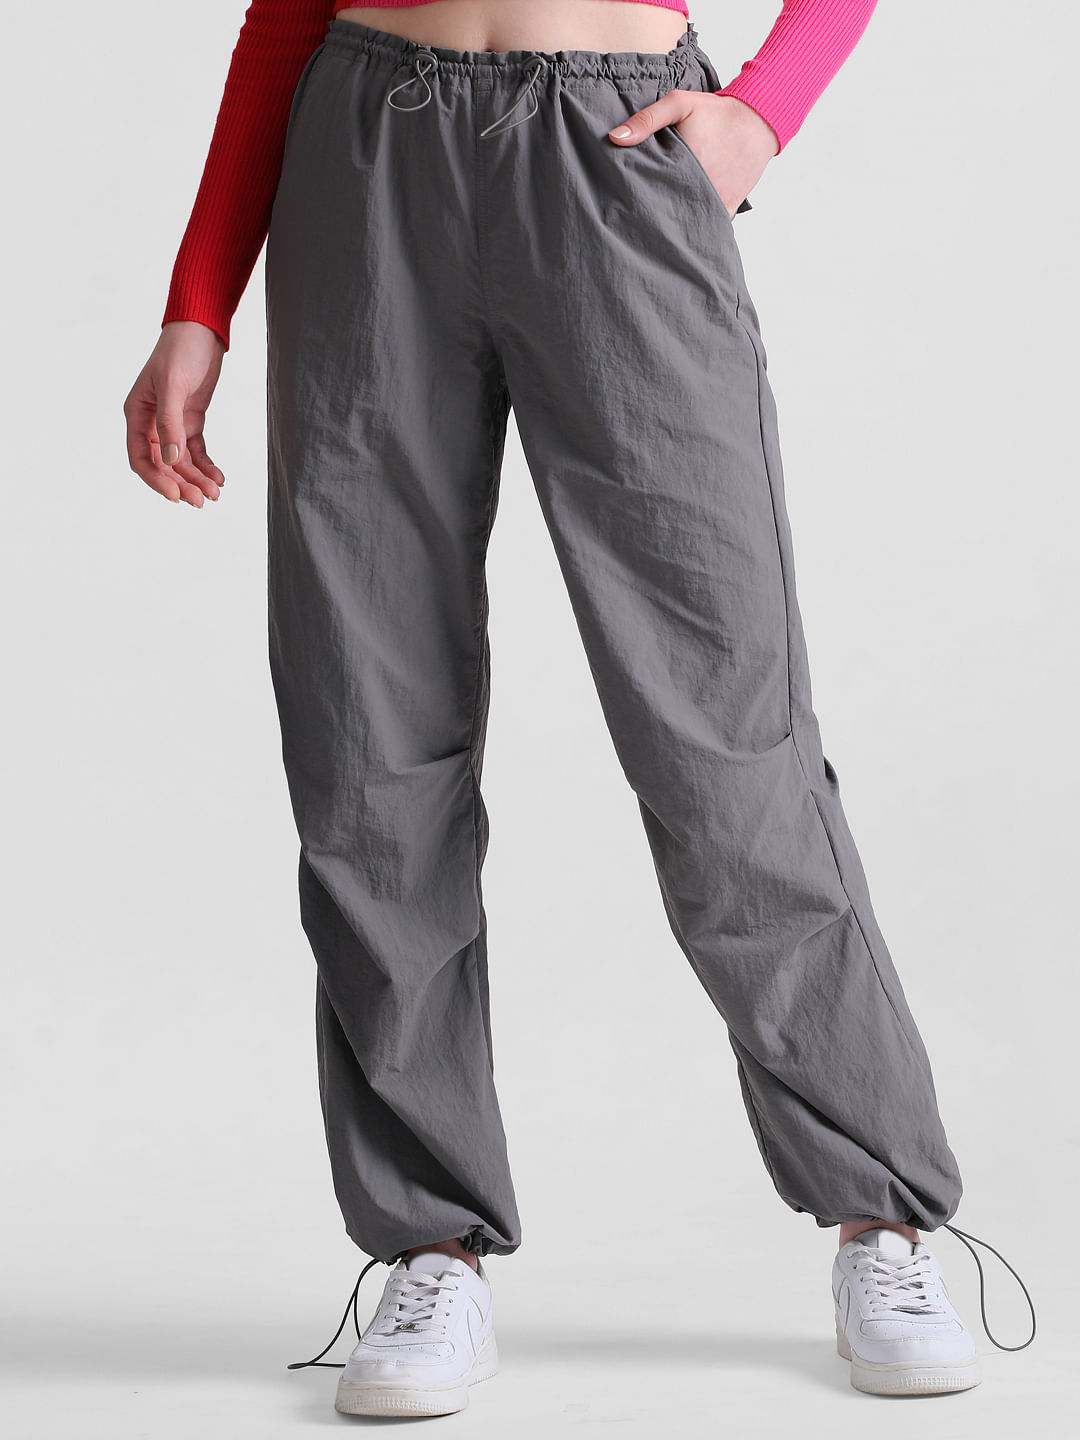 Womens Modular Travel Trekking Trousers  TRAVEL 100 Grey